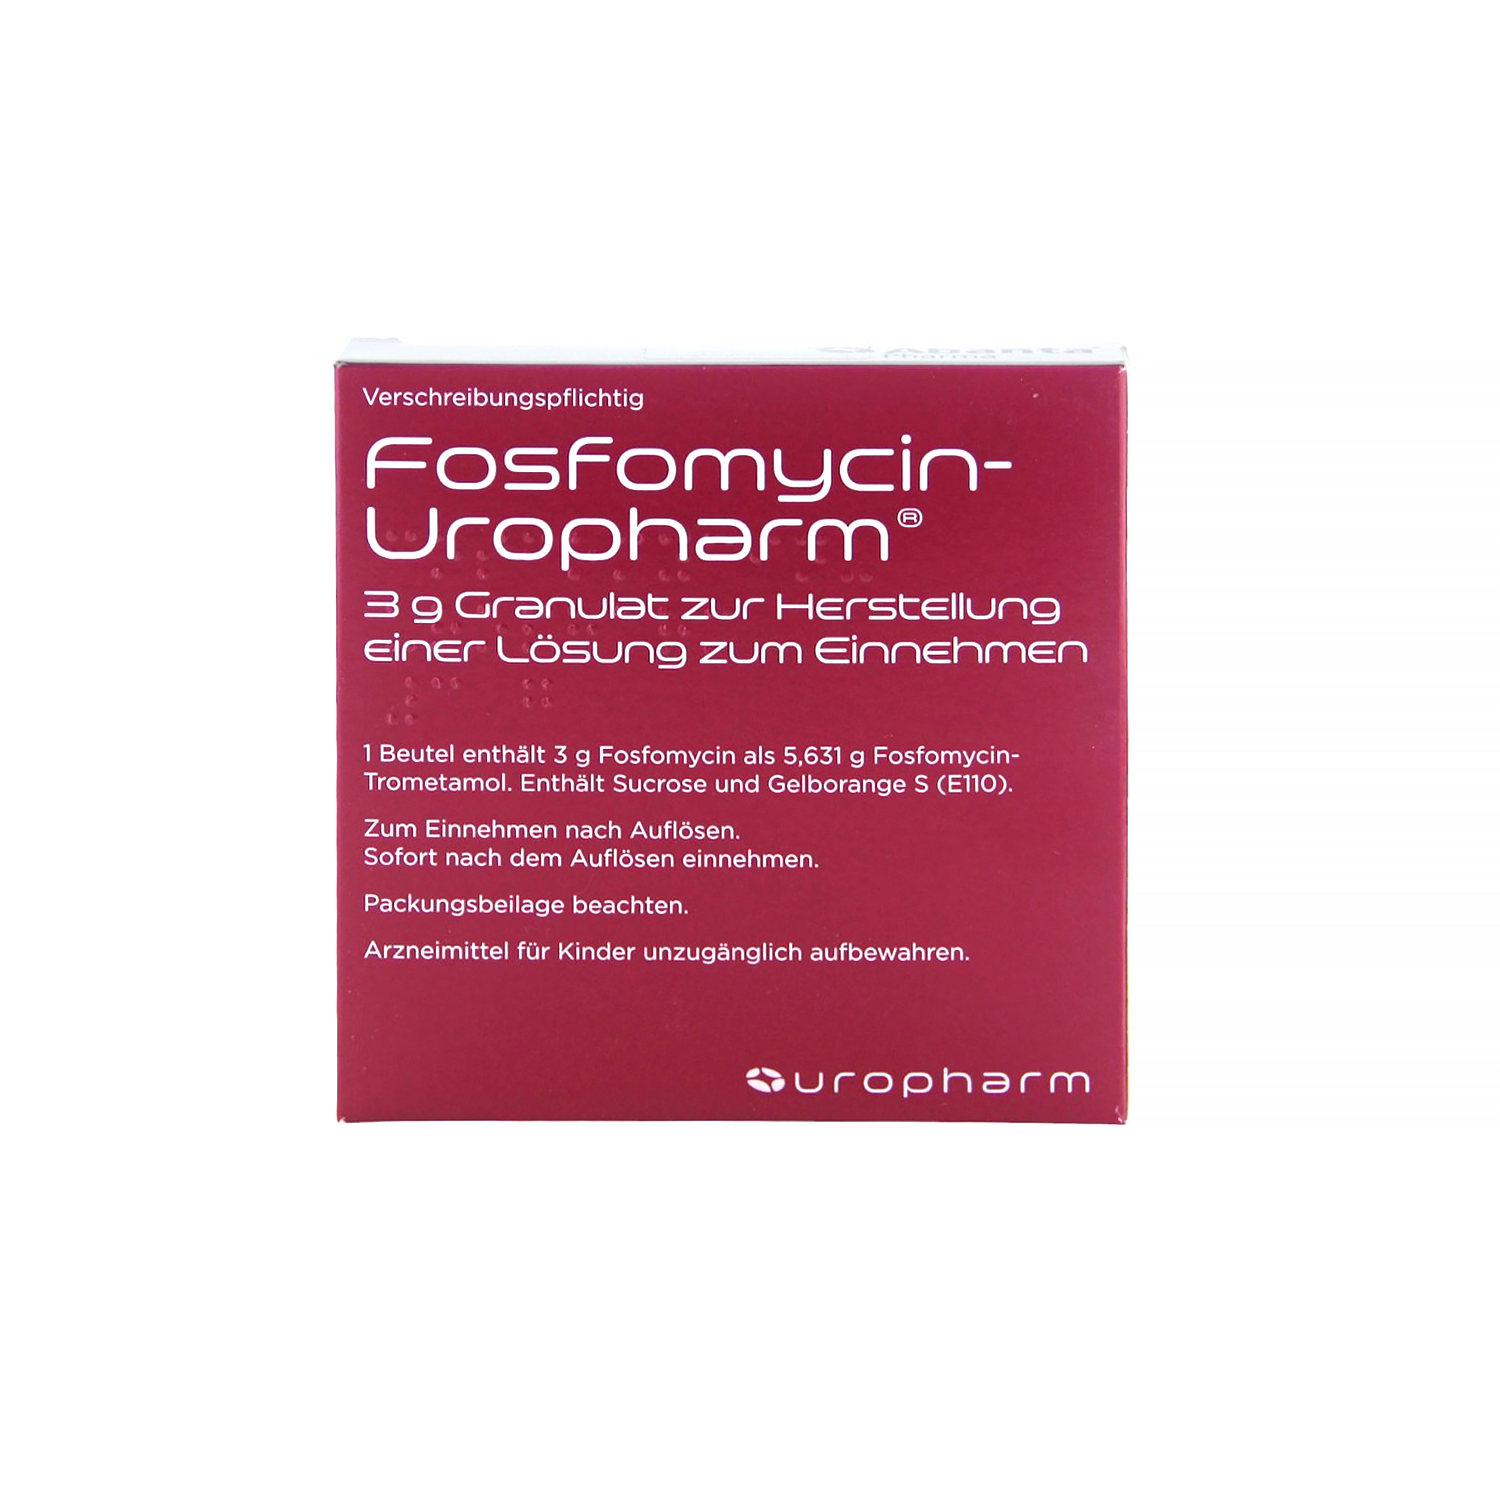 Fosfomycin-Uropharm 3 g (Antibiotikum)